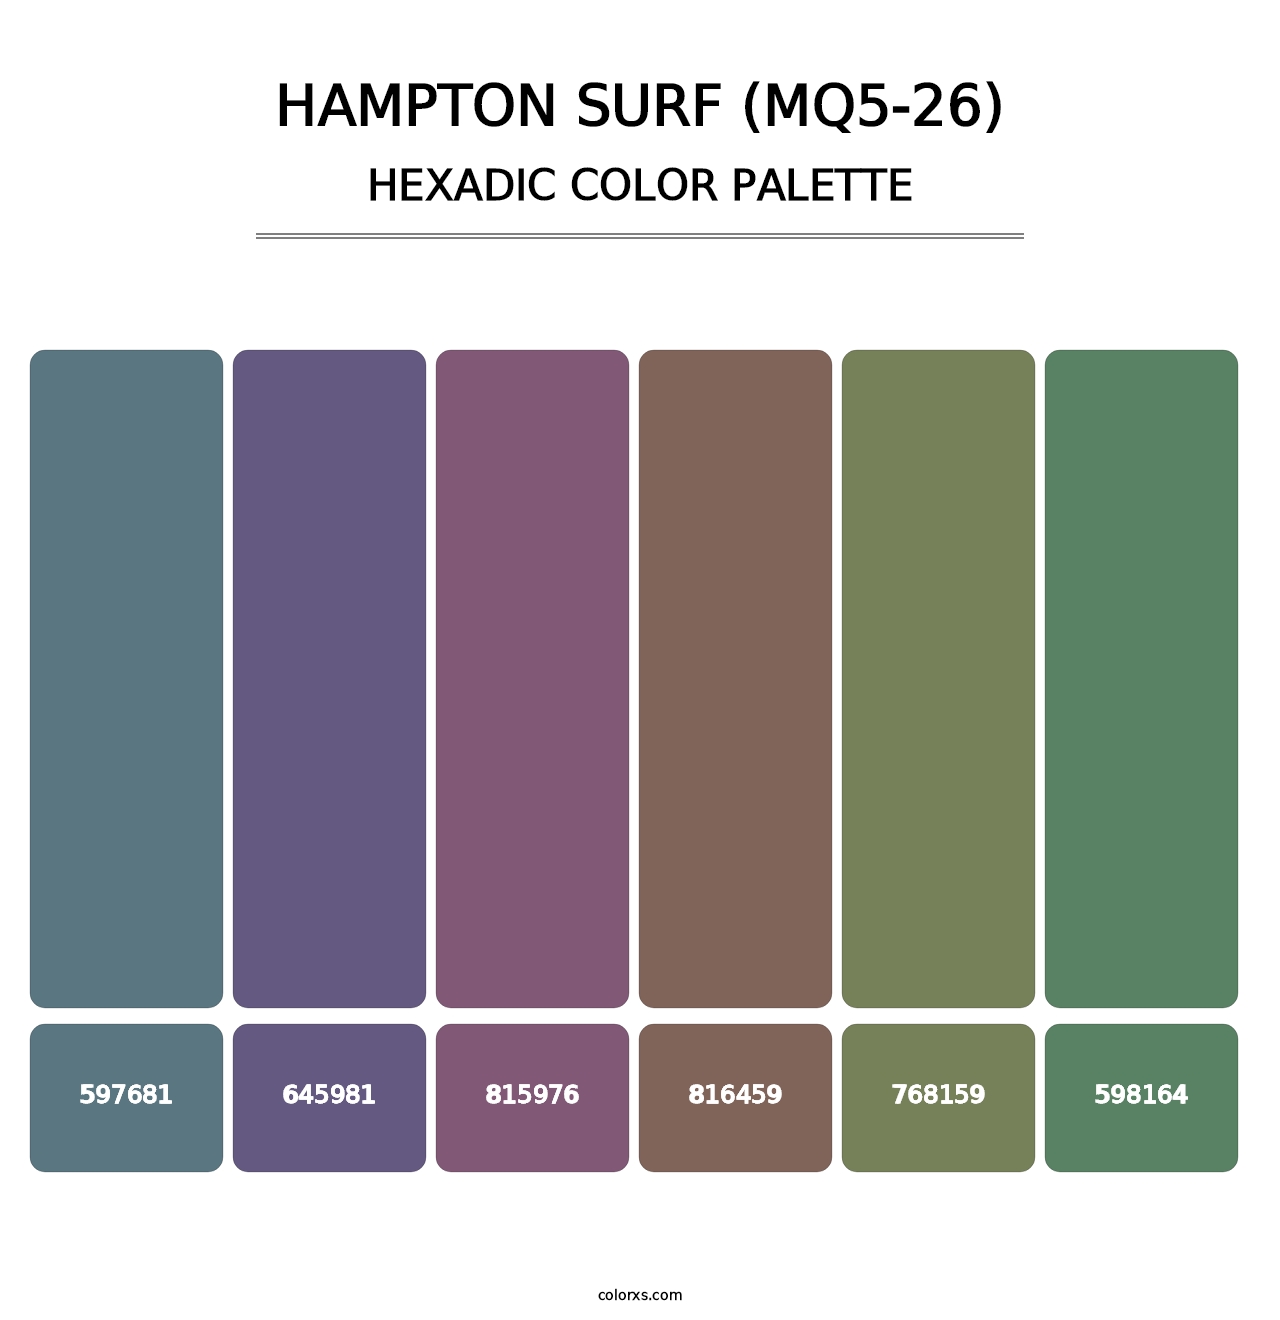 Hampton Surf (MQ5-26) - Hexadic Color Palette